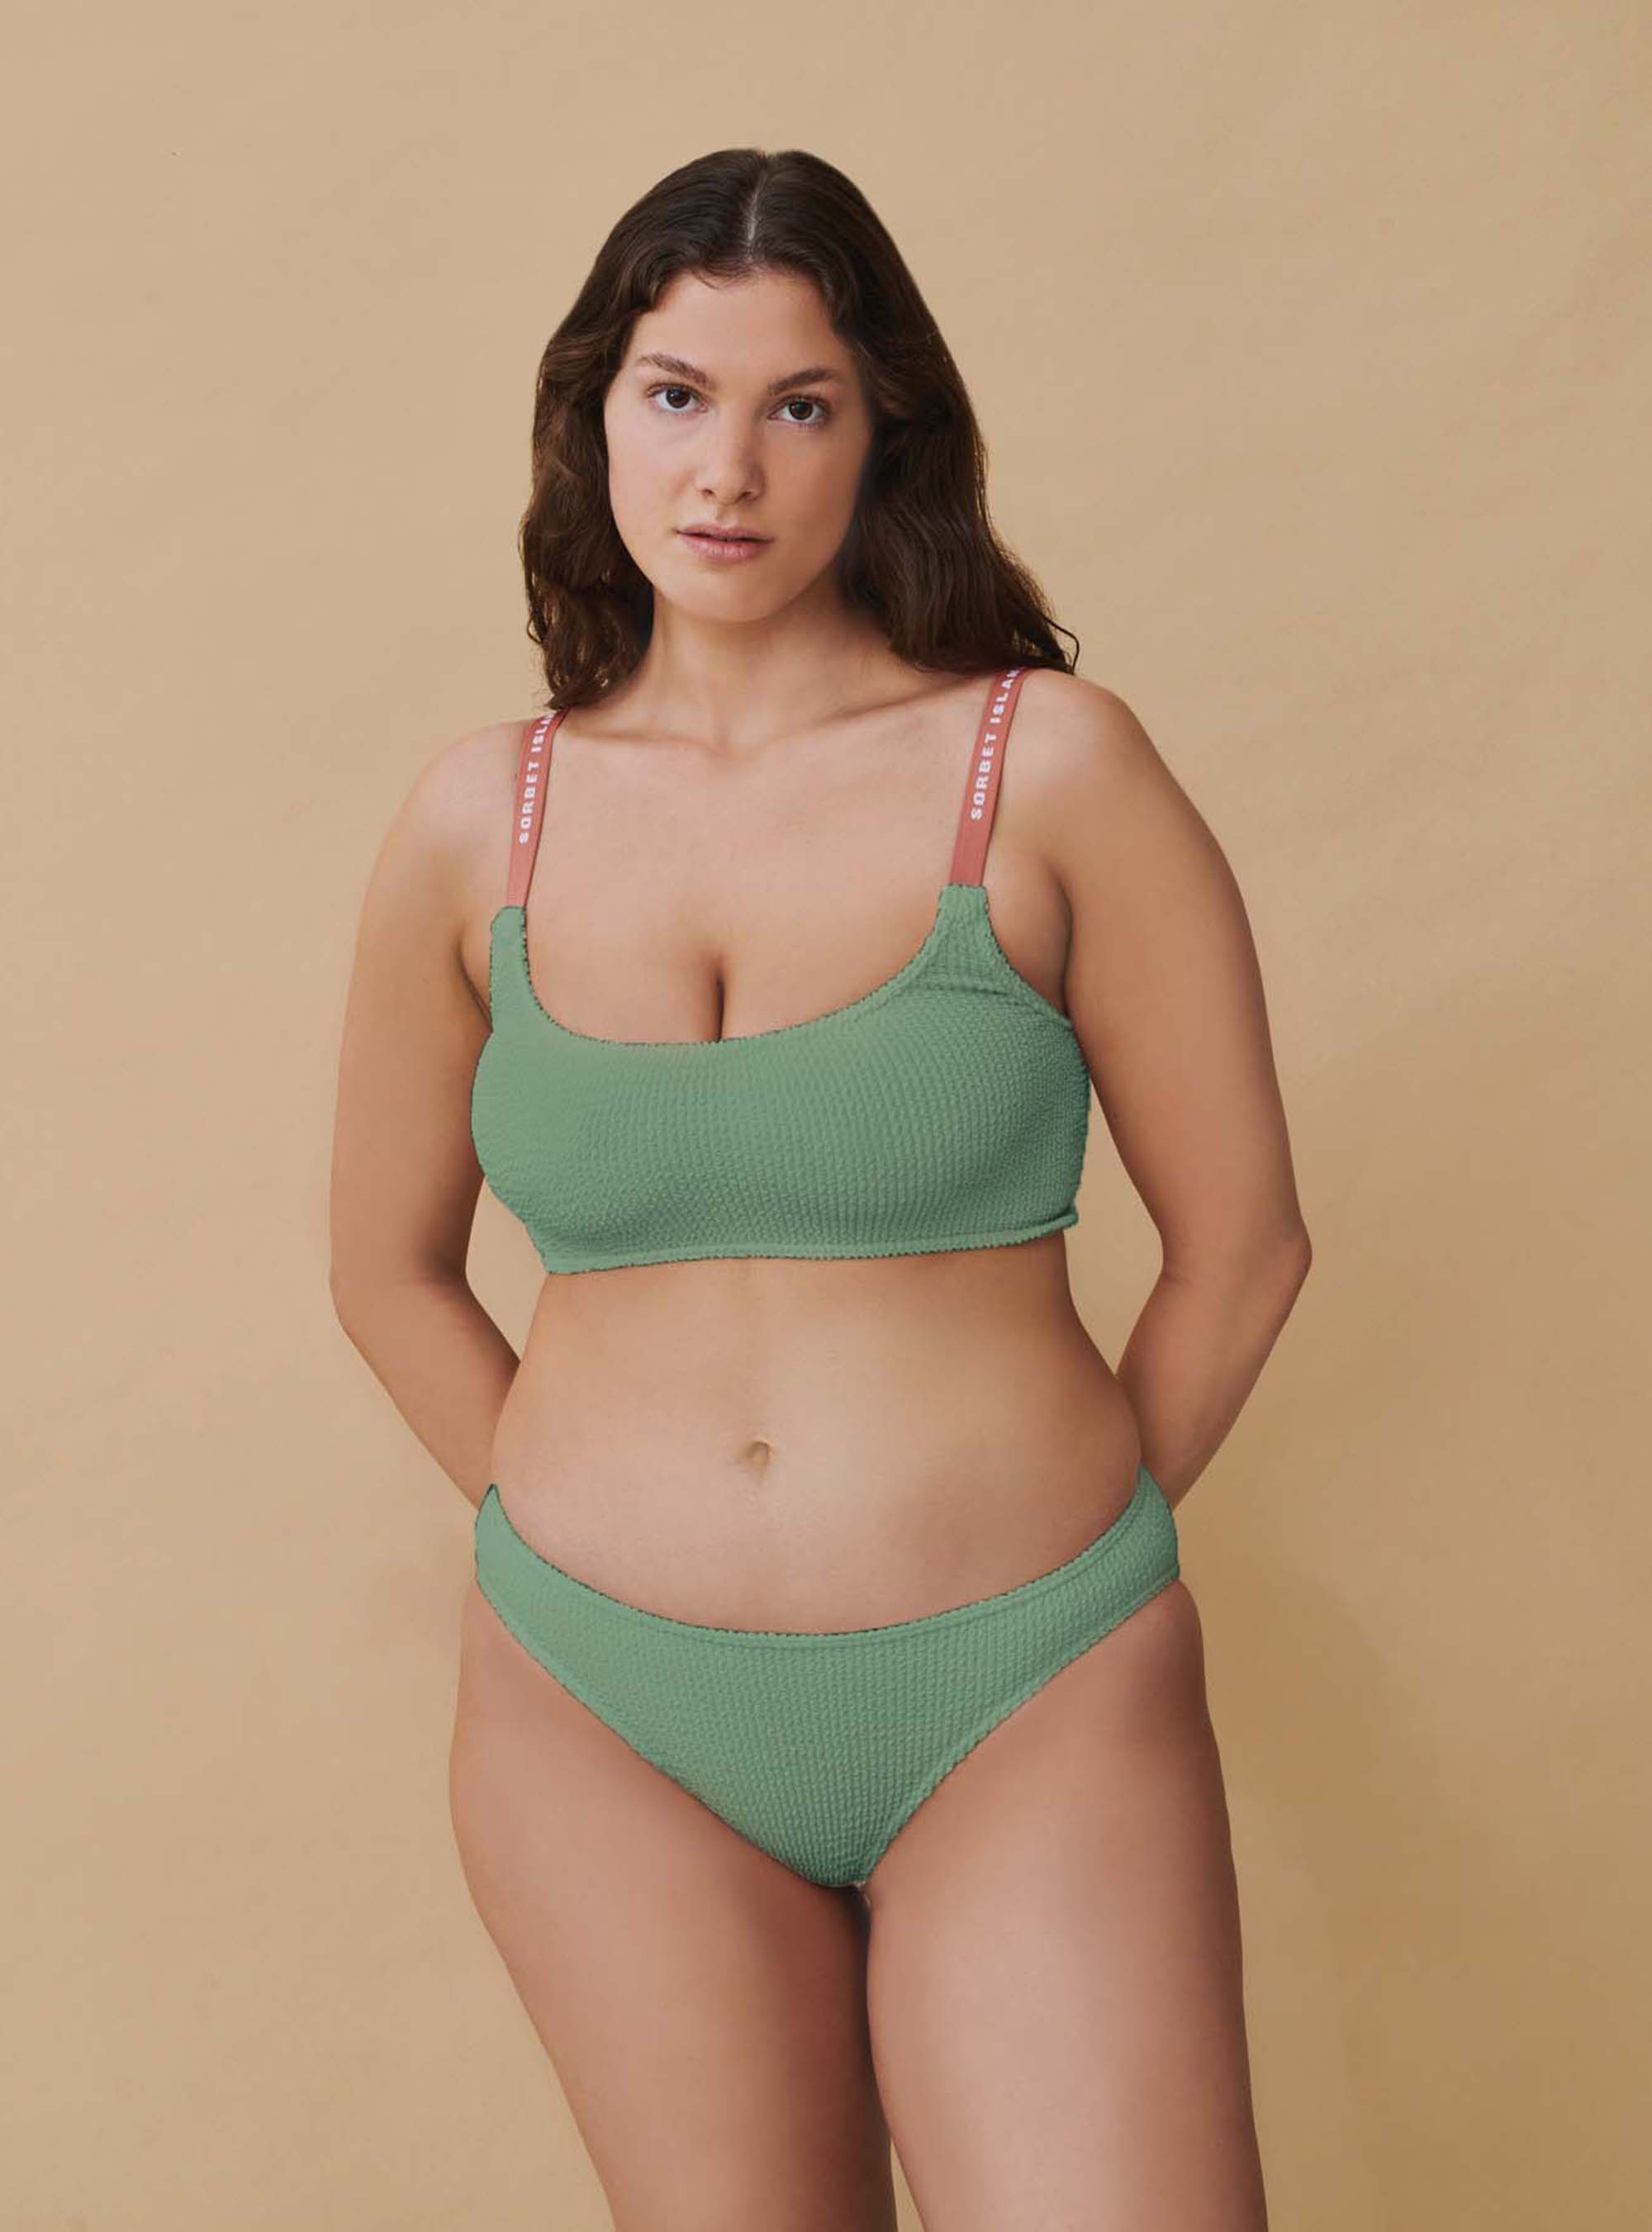 Olympia - One Size Bikini